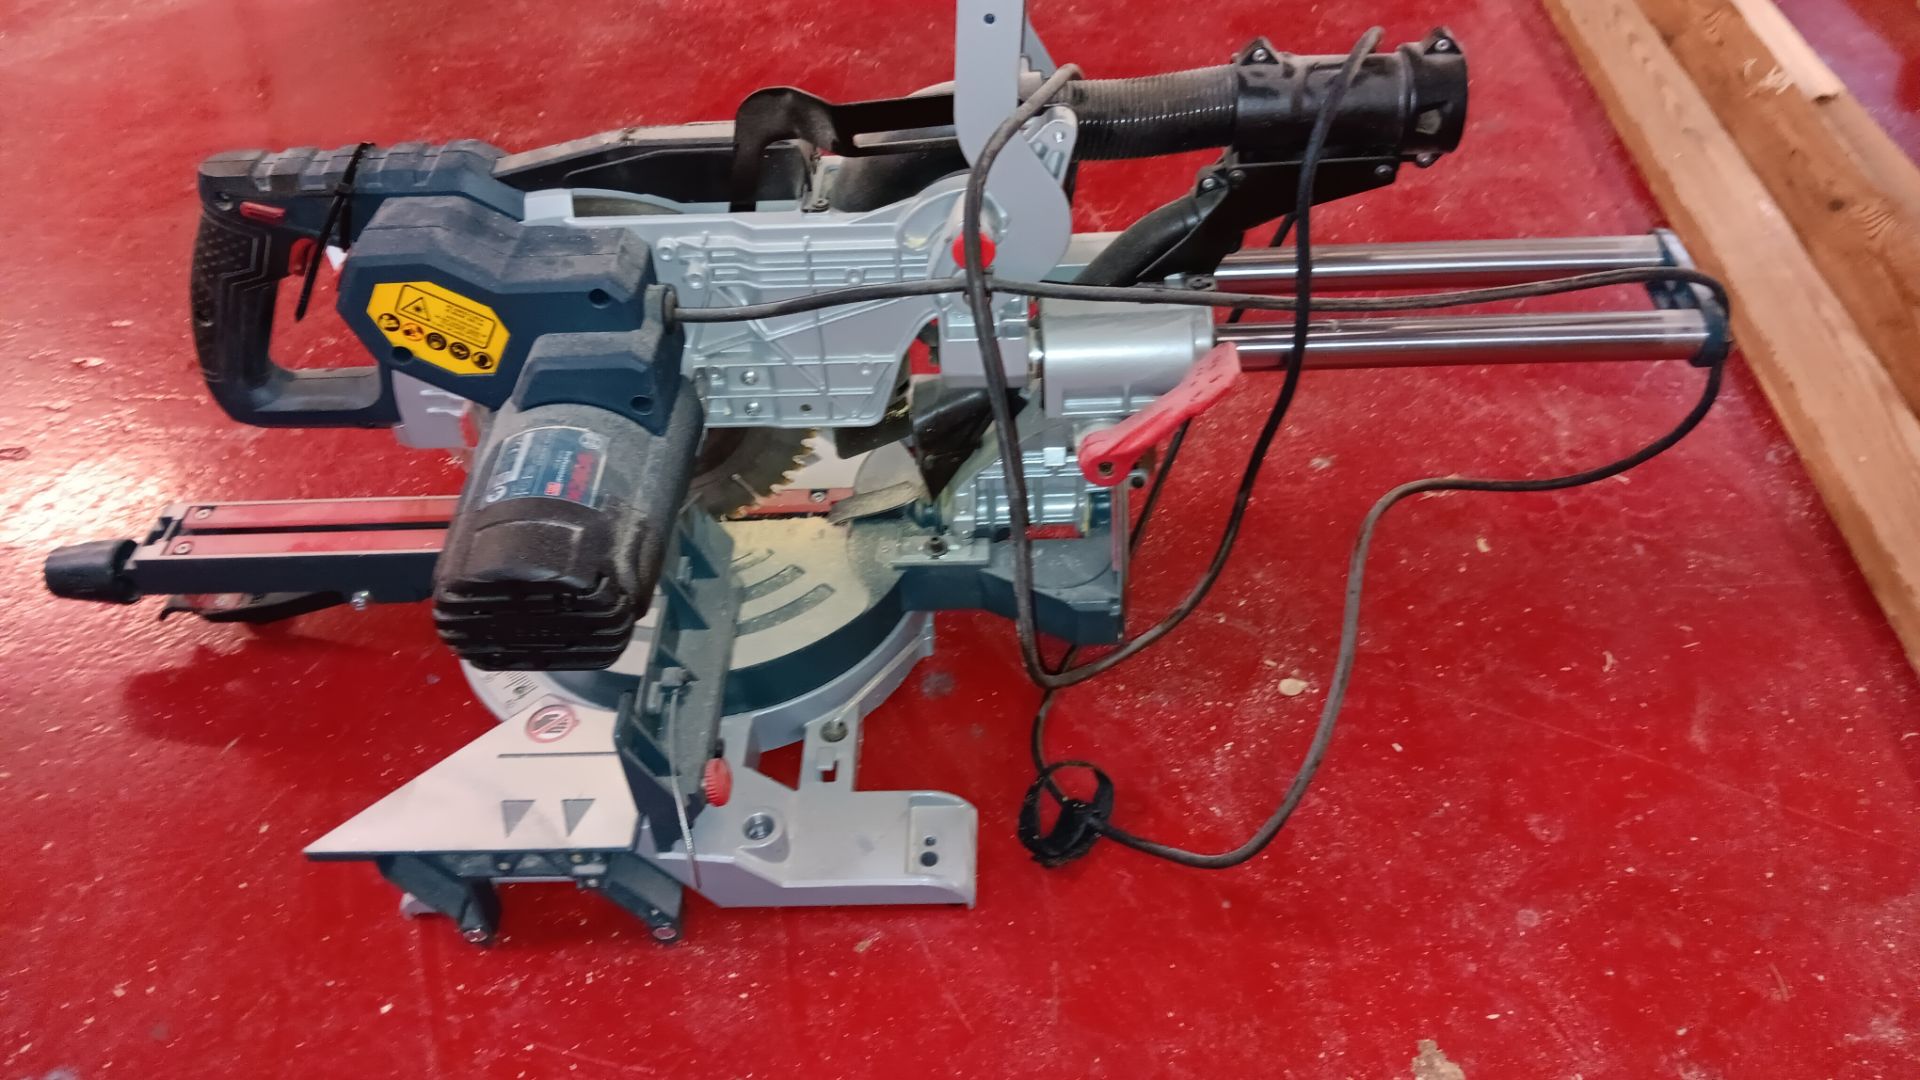 Bosch GCM 8 SJL Sliding Mitre Saw (May 2021) S/N 125001635, 240v - Image 2 of 3